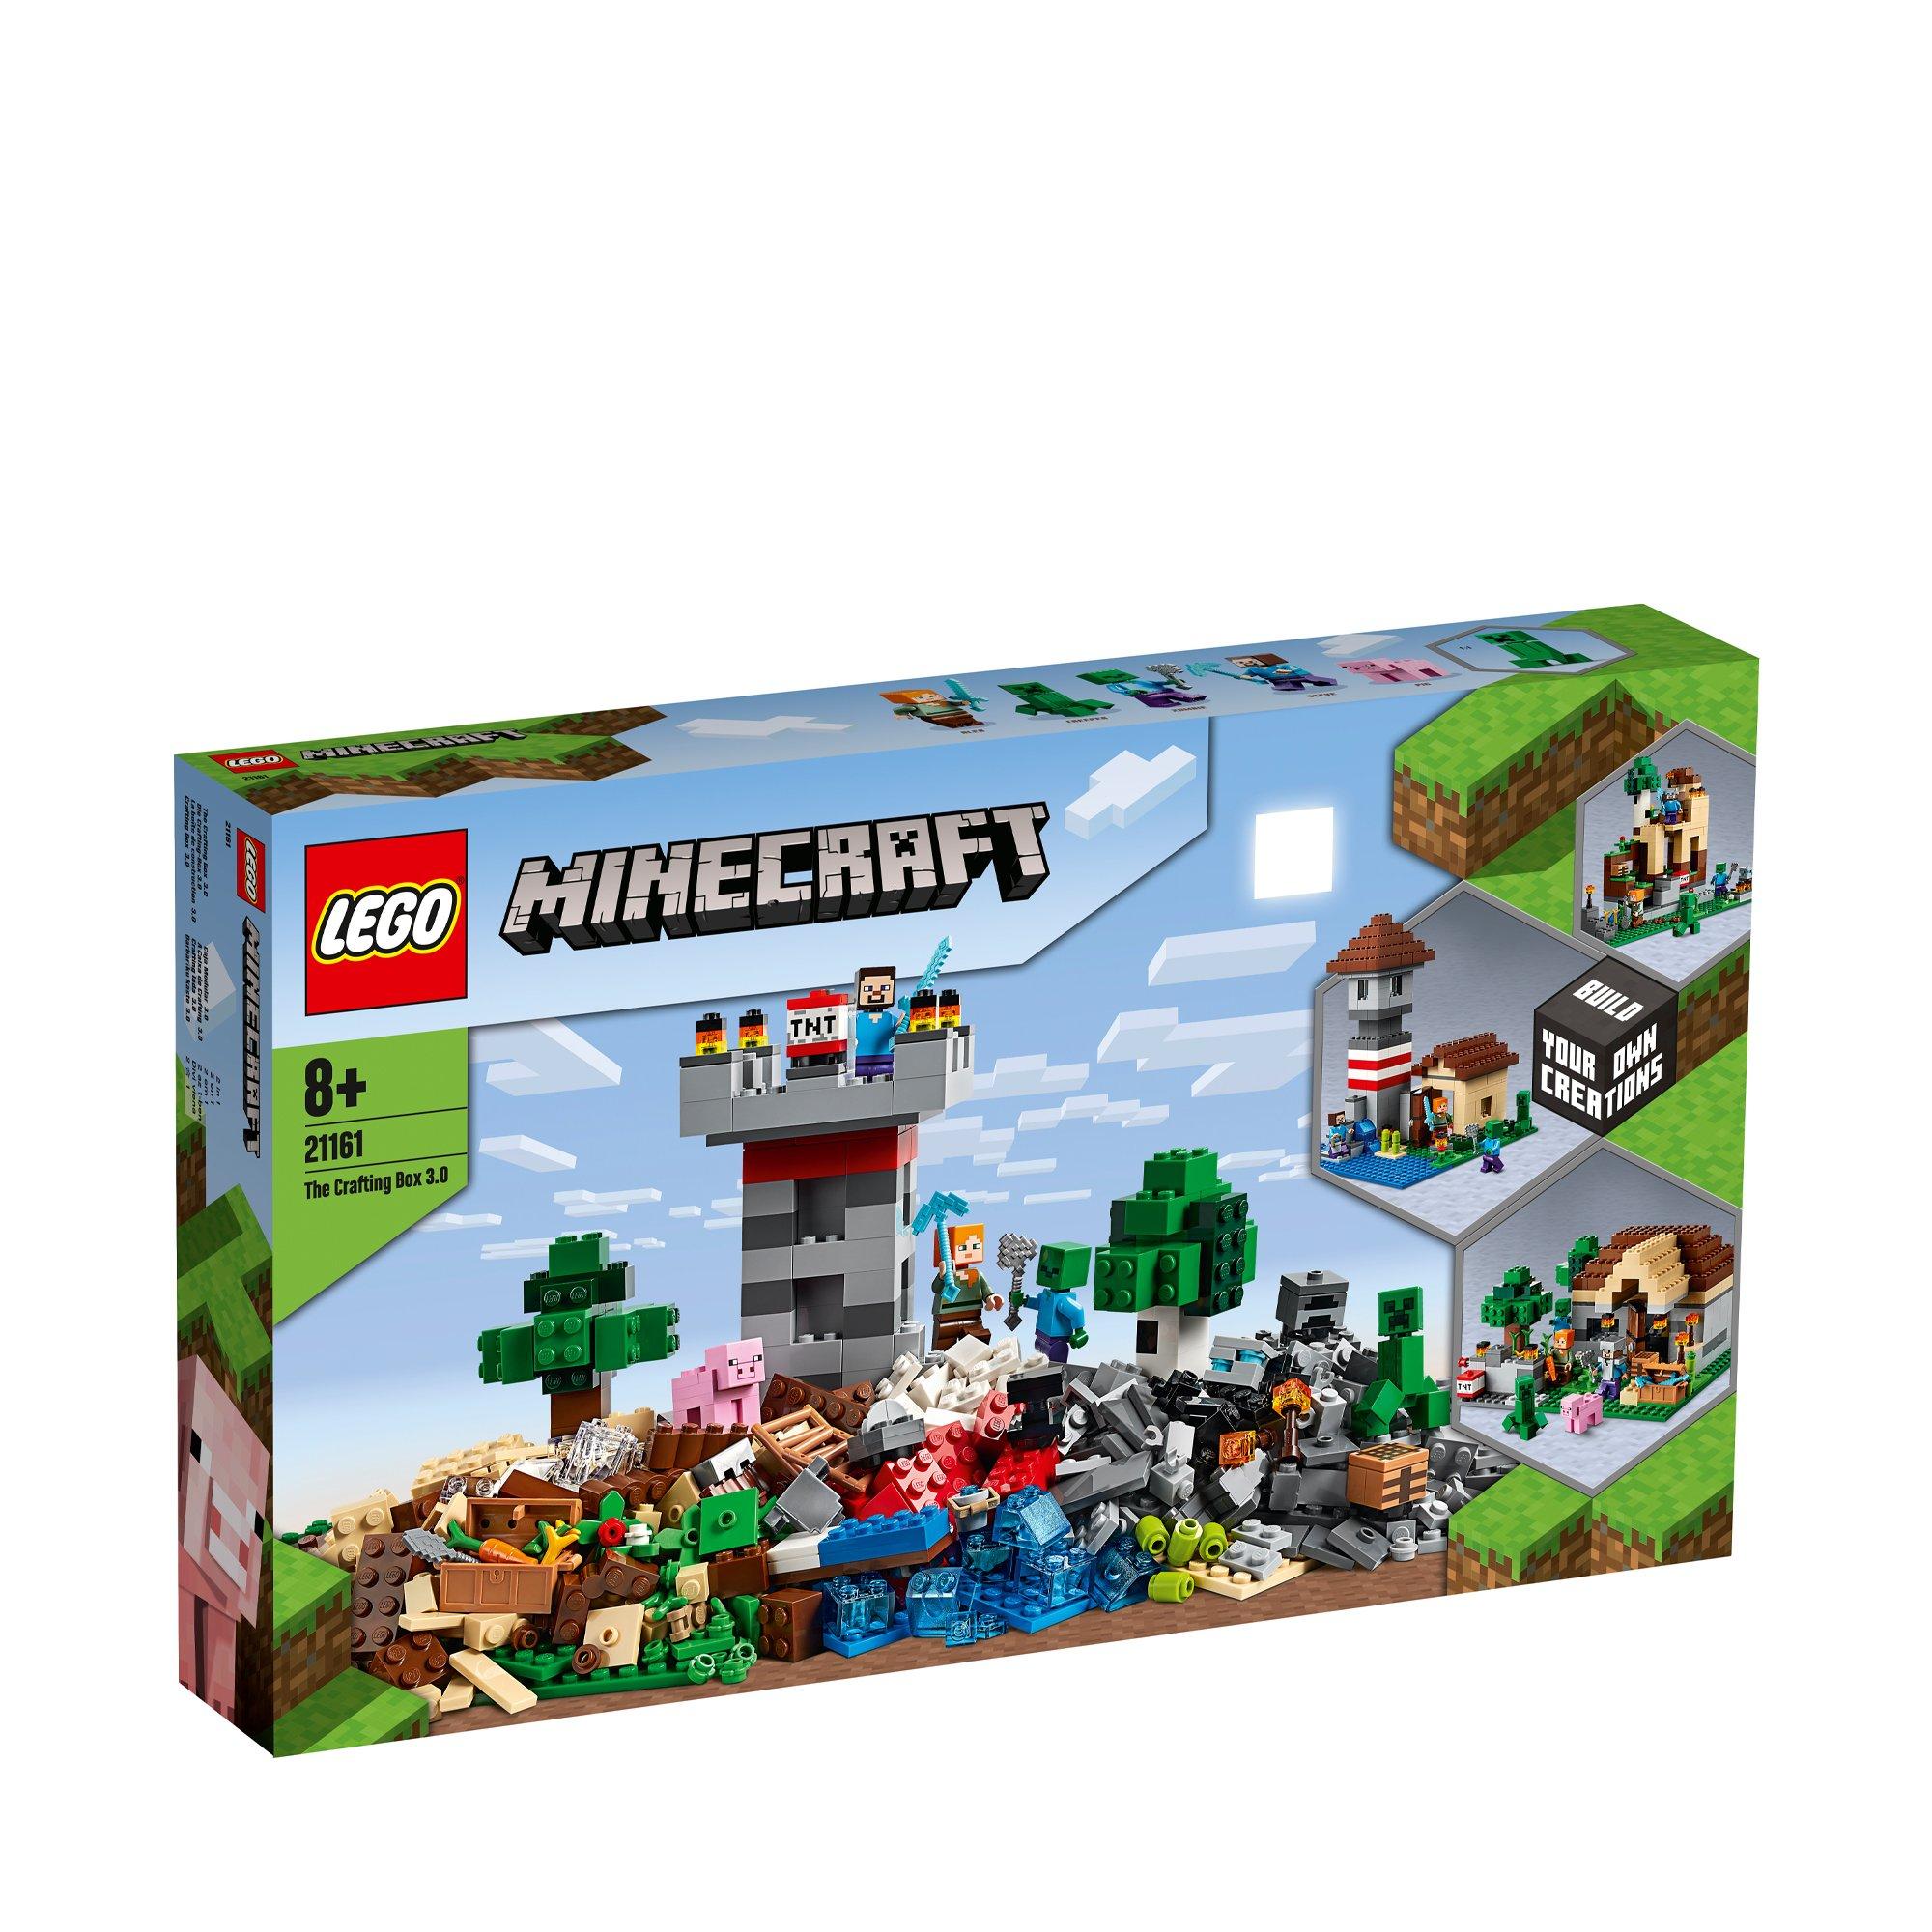 Image of LEGO 21161 Die Crafting-Box 3.0